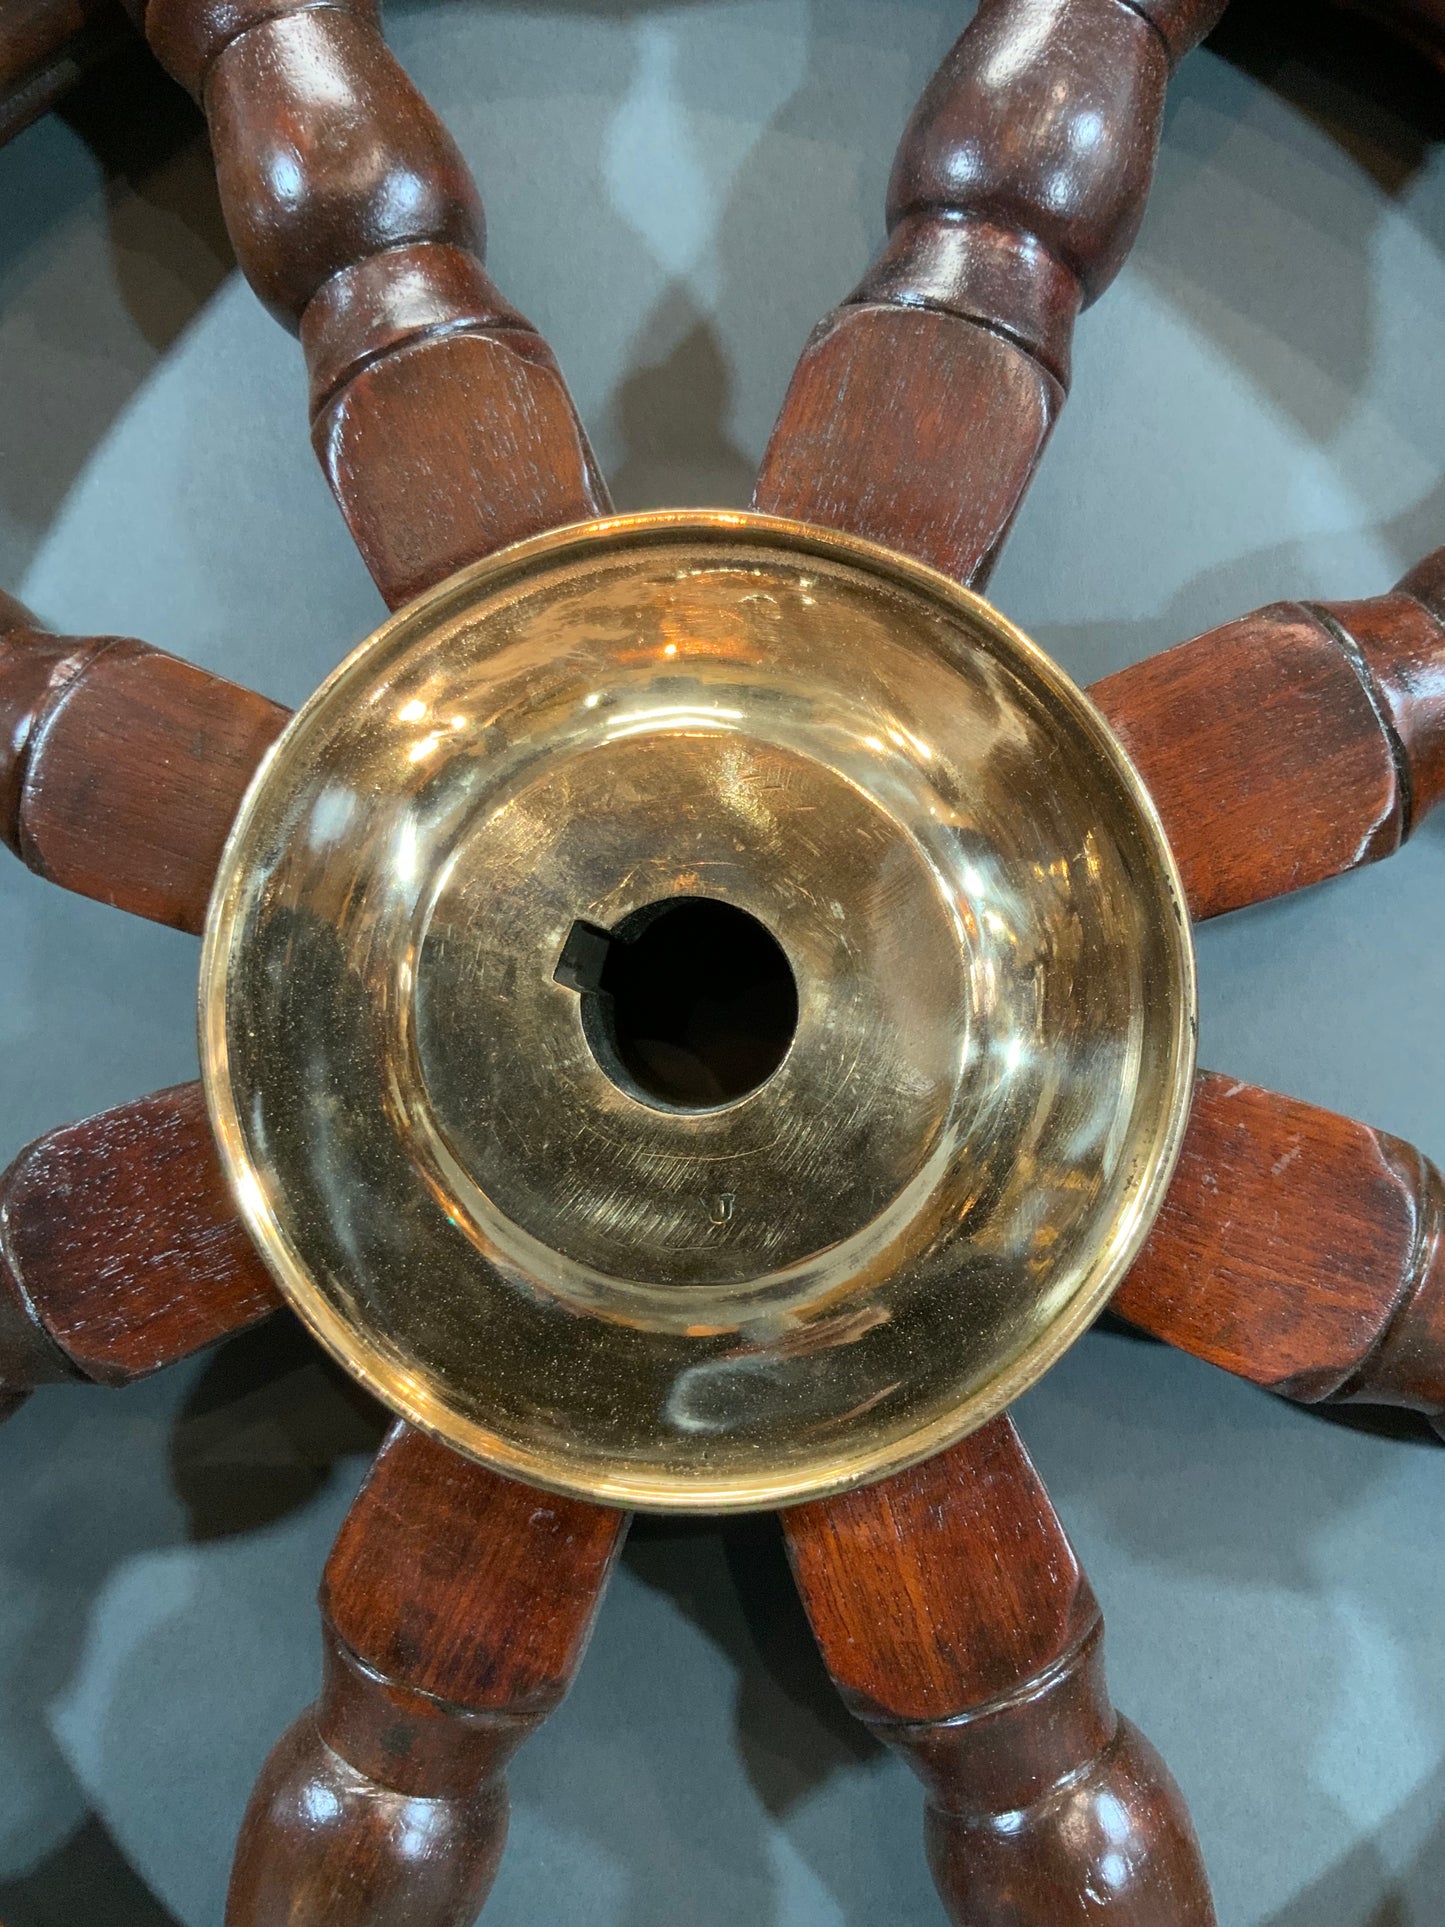 Eight spoke ships wheel with solid brass – Lannan Gallery - Lannan Gallery